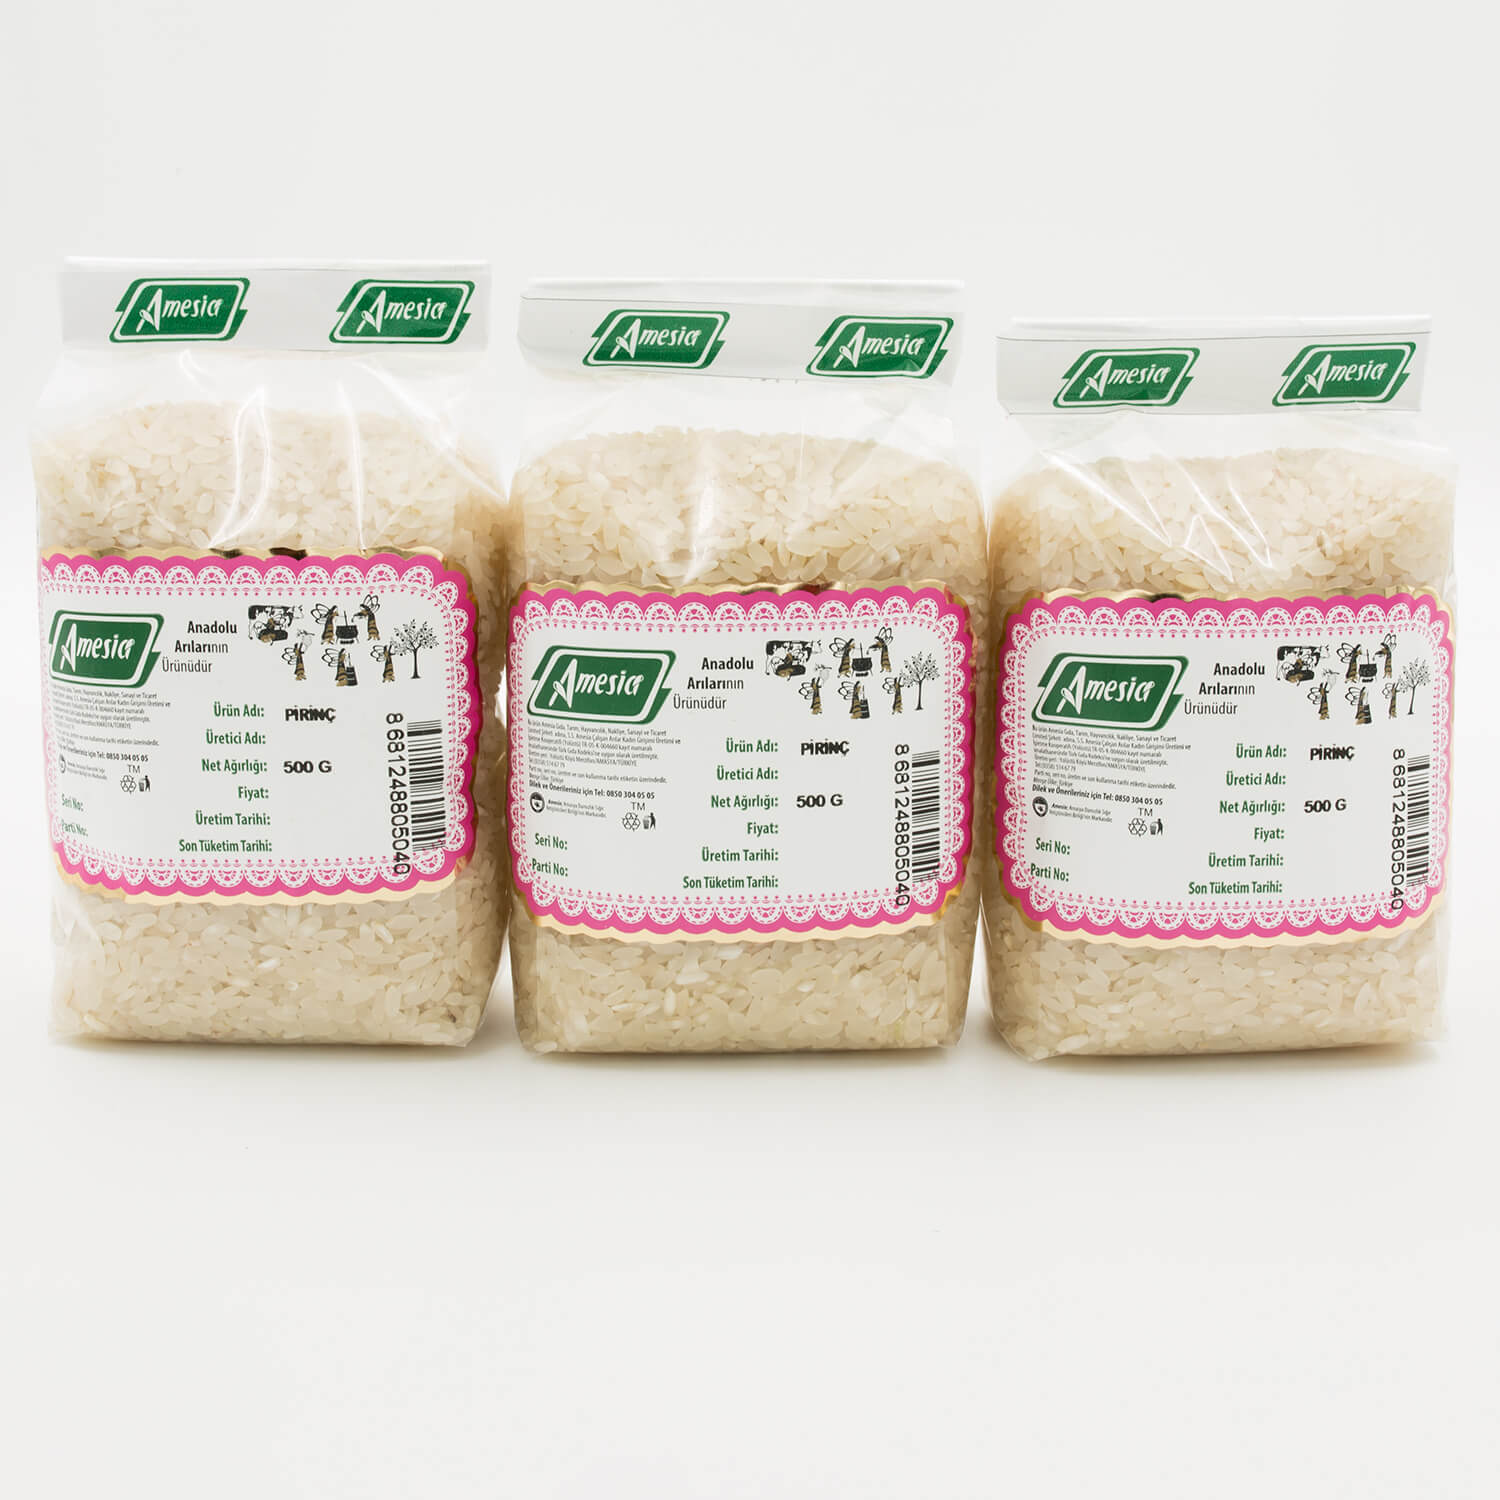 Pirinç 500 G. 3 Adet